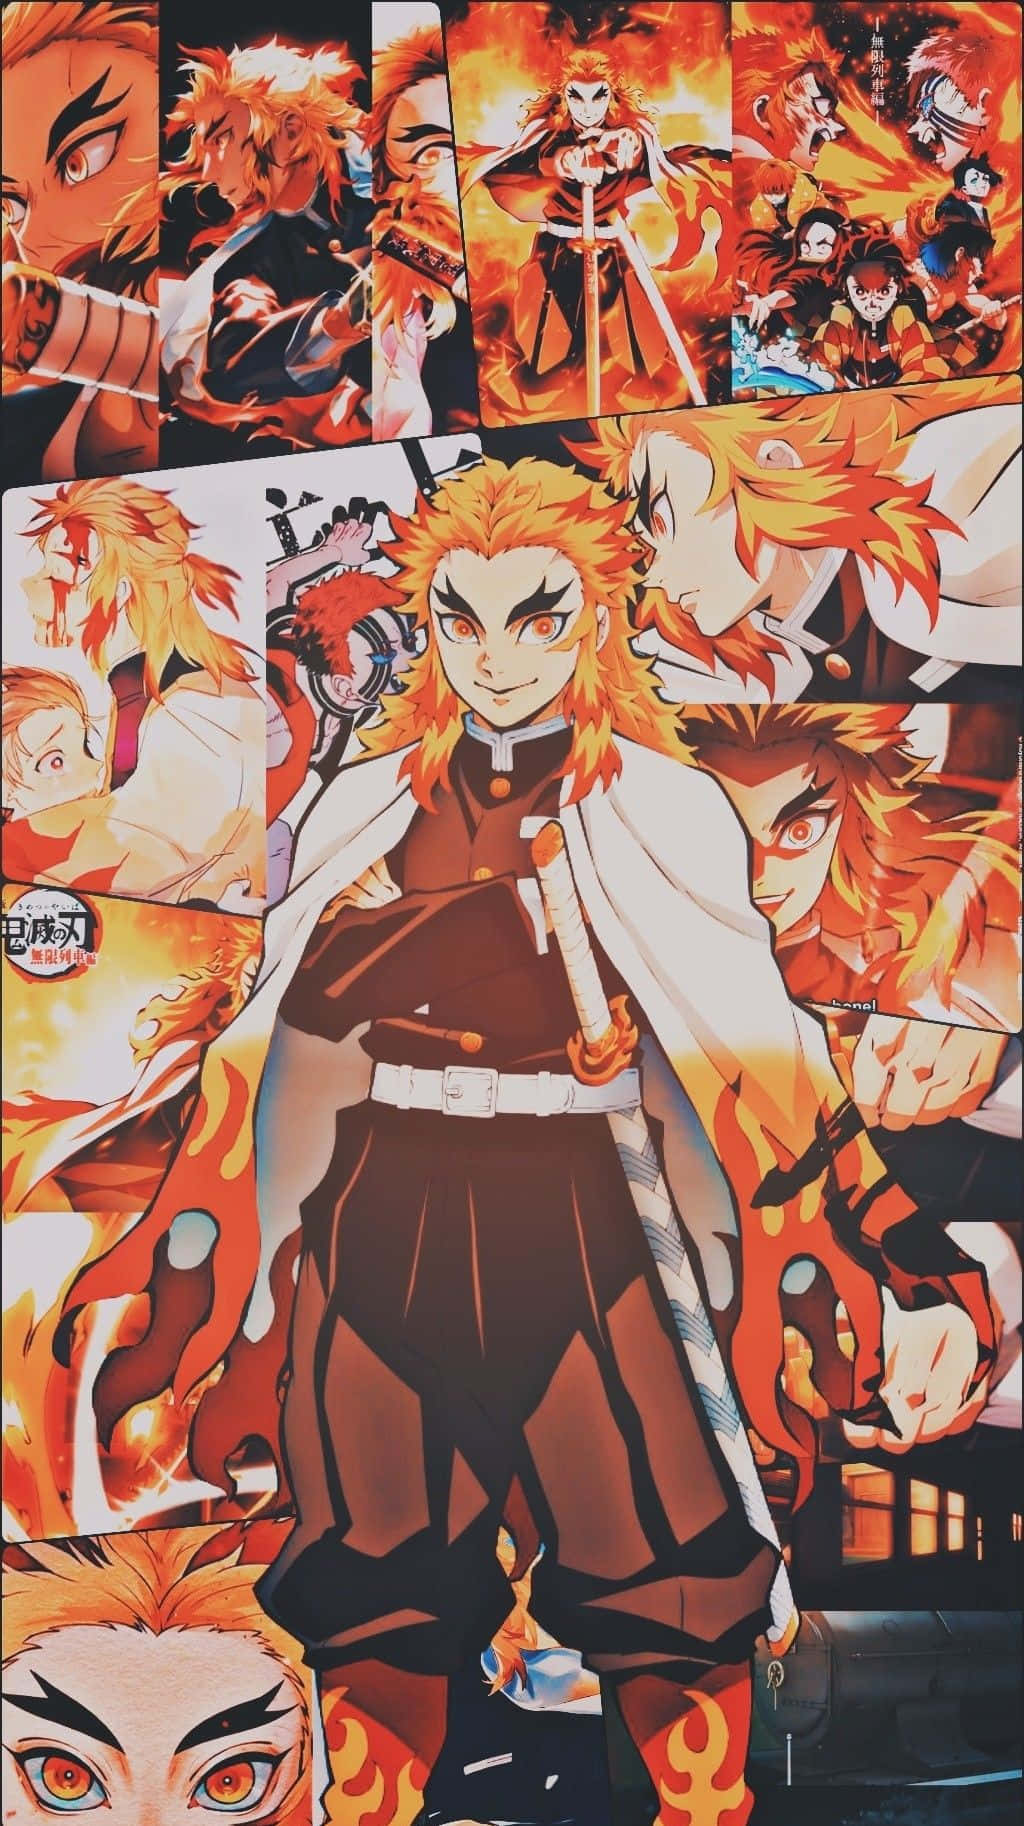 Rengoku Aesthetic: Fire Breathing Hero Enshrouded in Flames Wallpaper